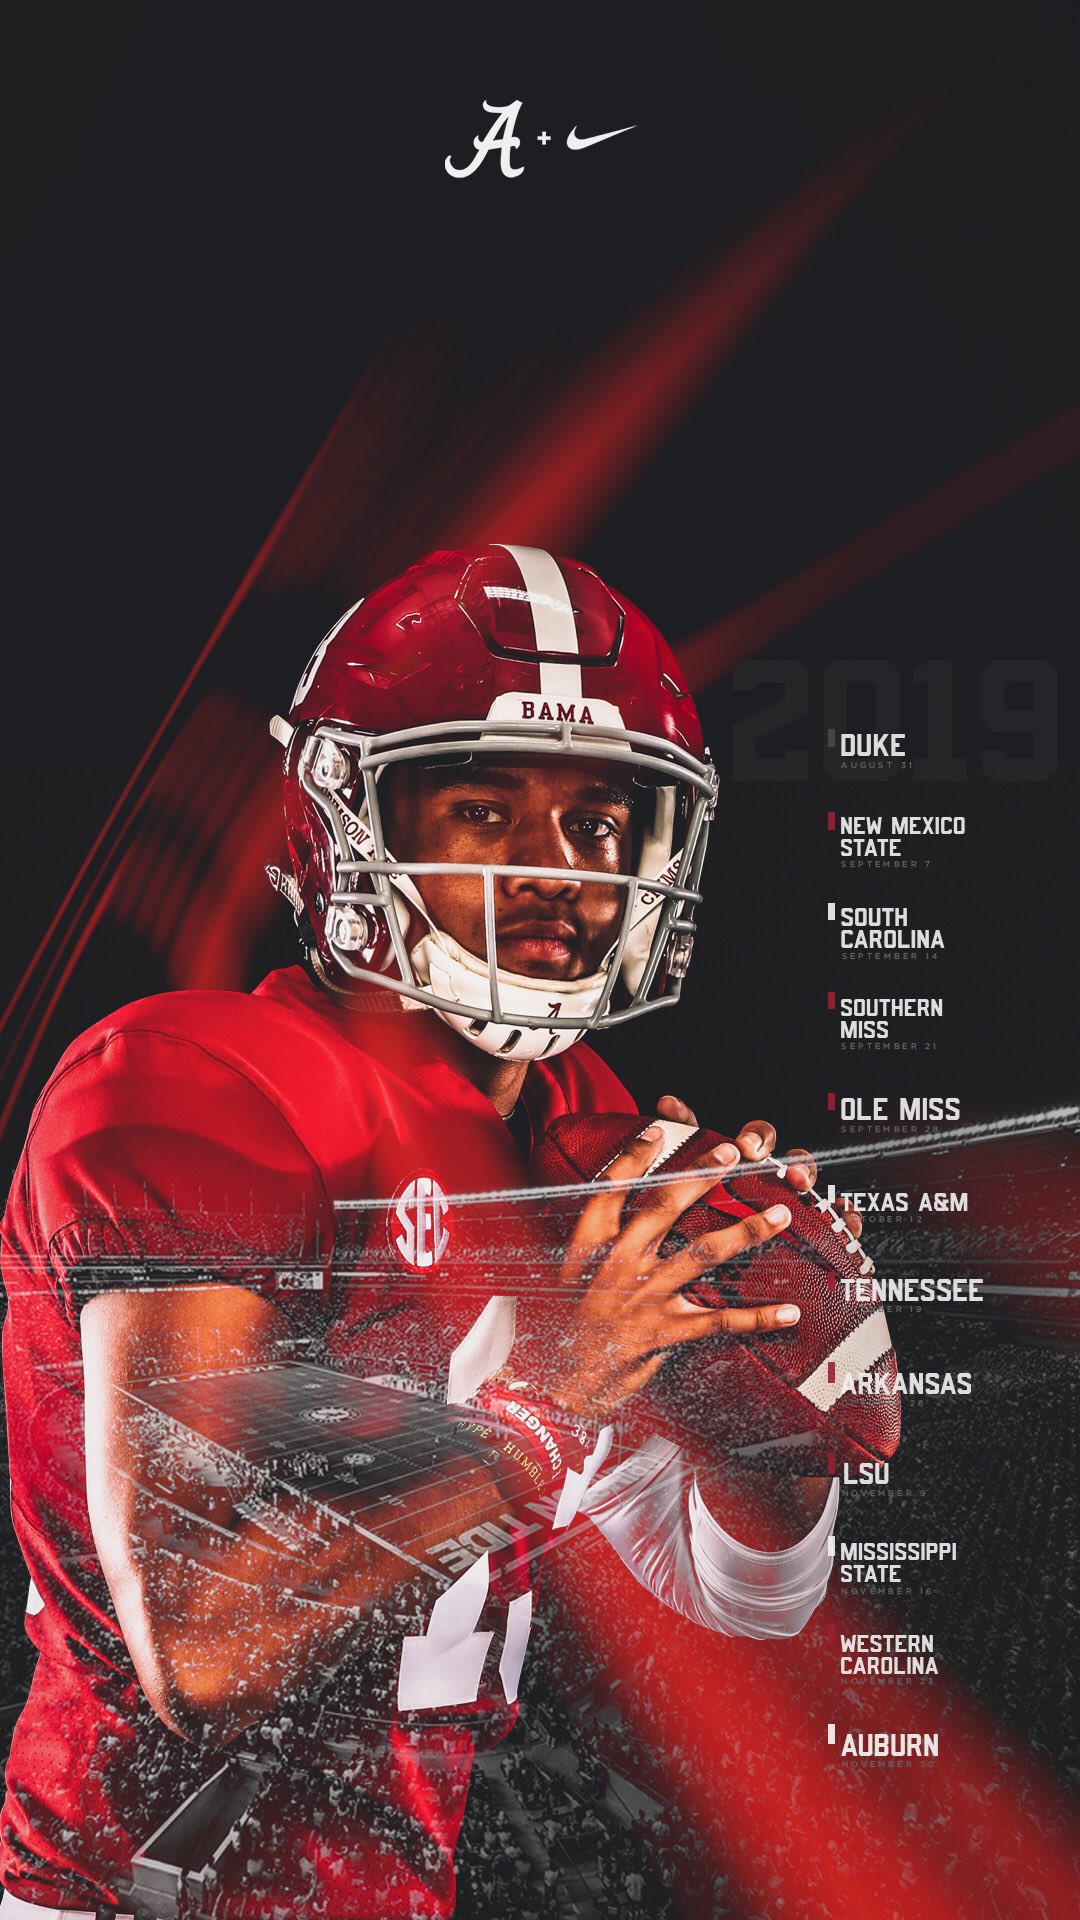 Alabama Football Wallpapers